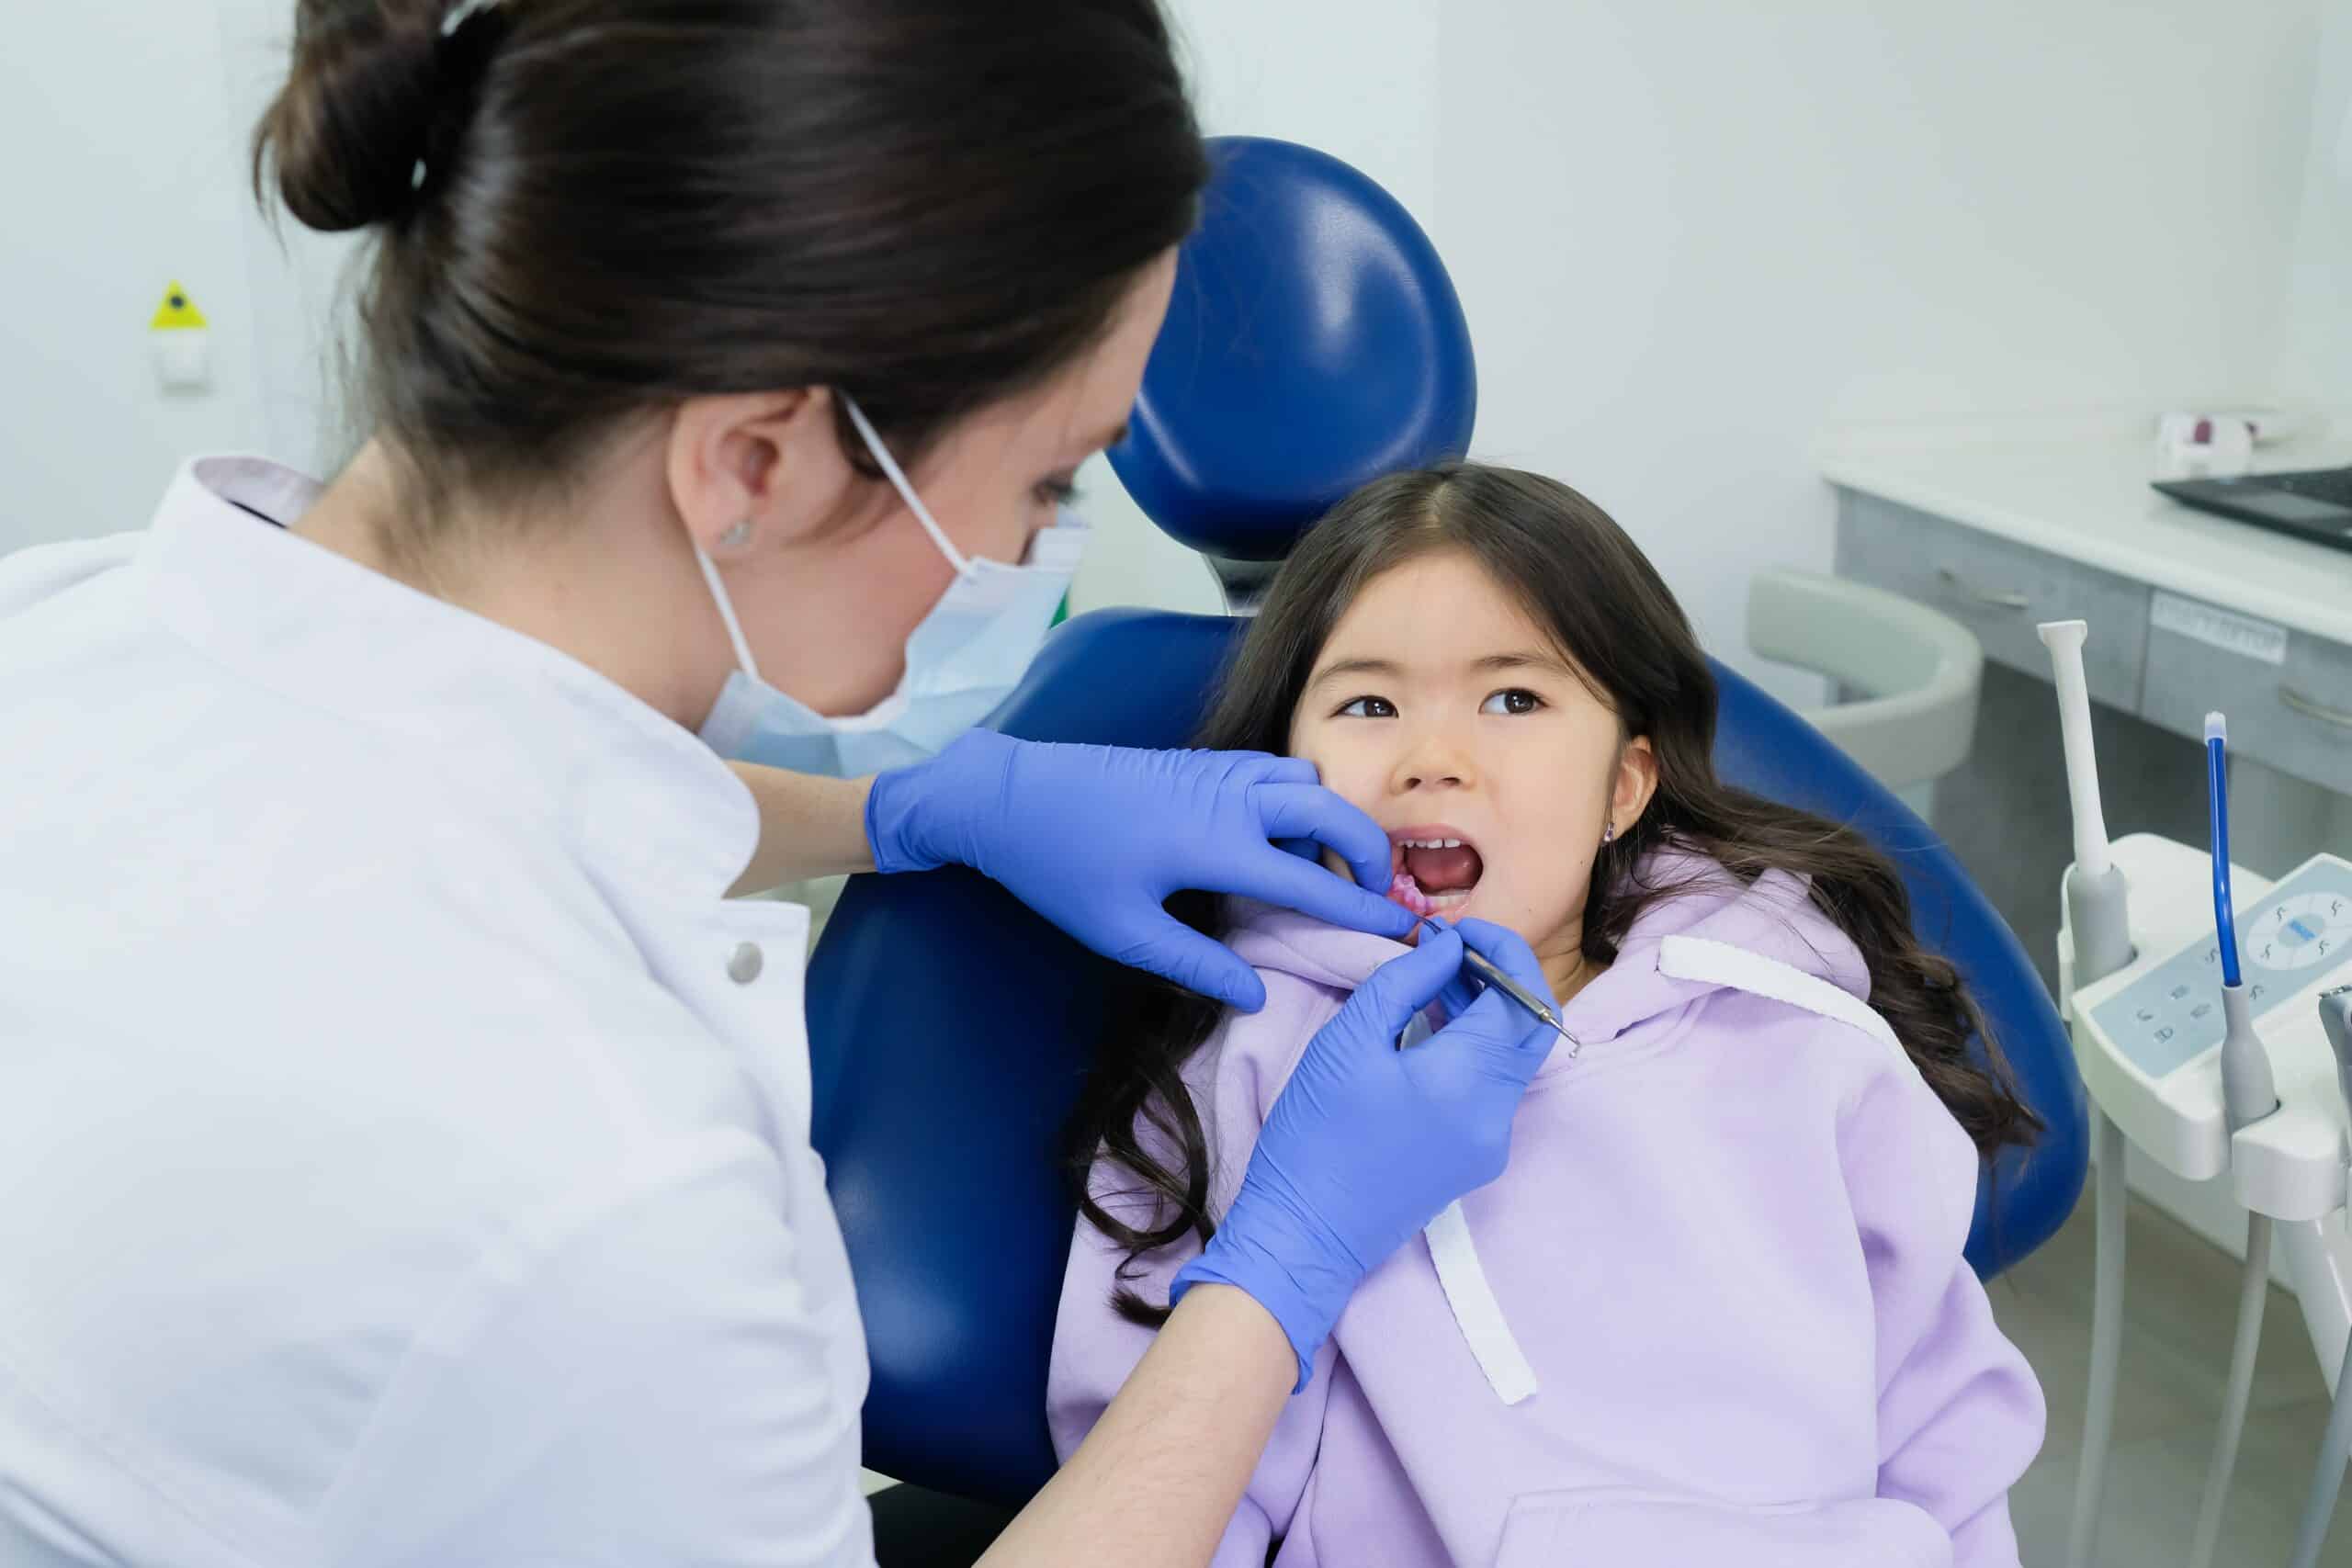 Child's First Dental Visit